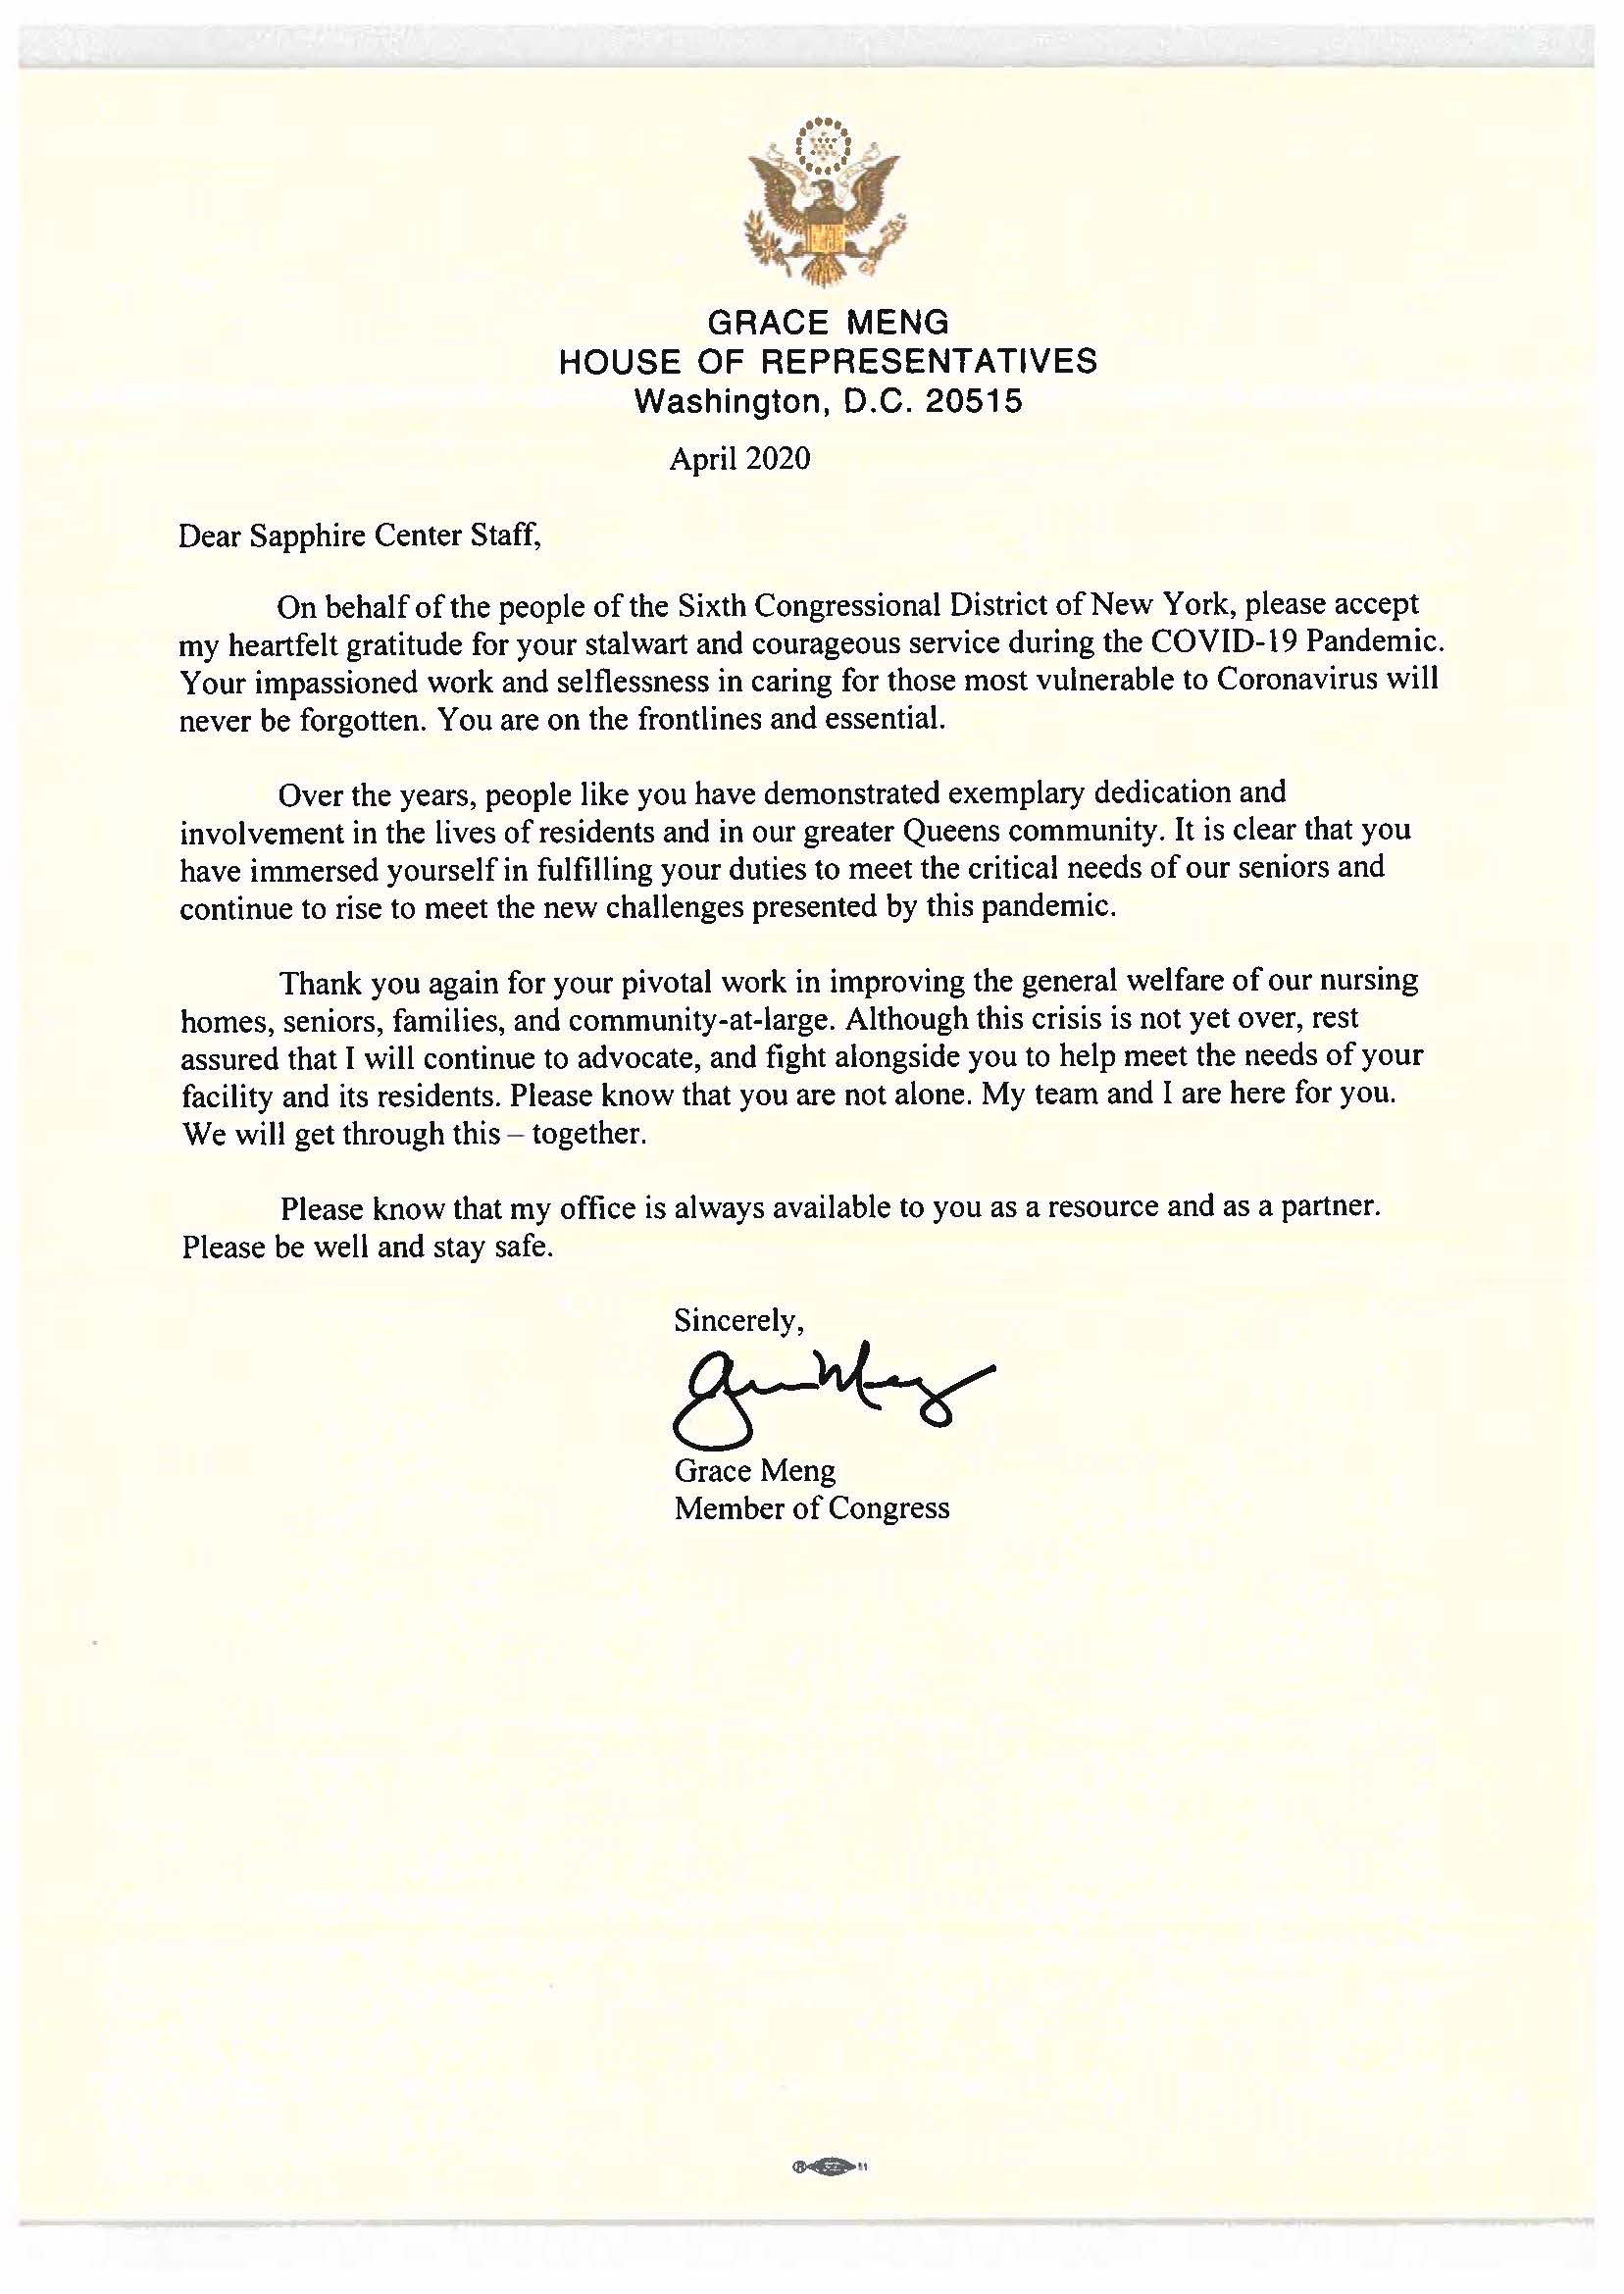 Sapphire Center letter from Congress